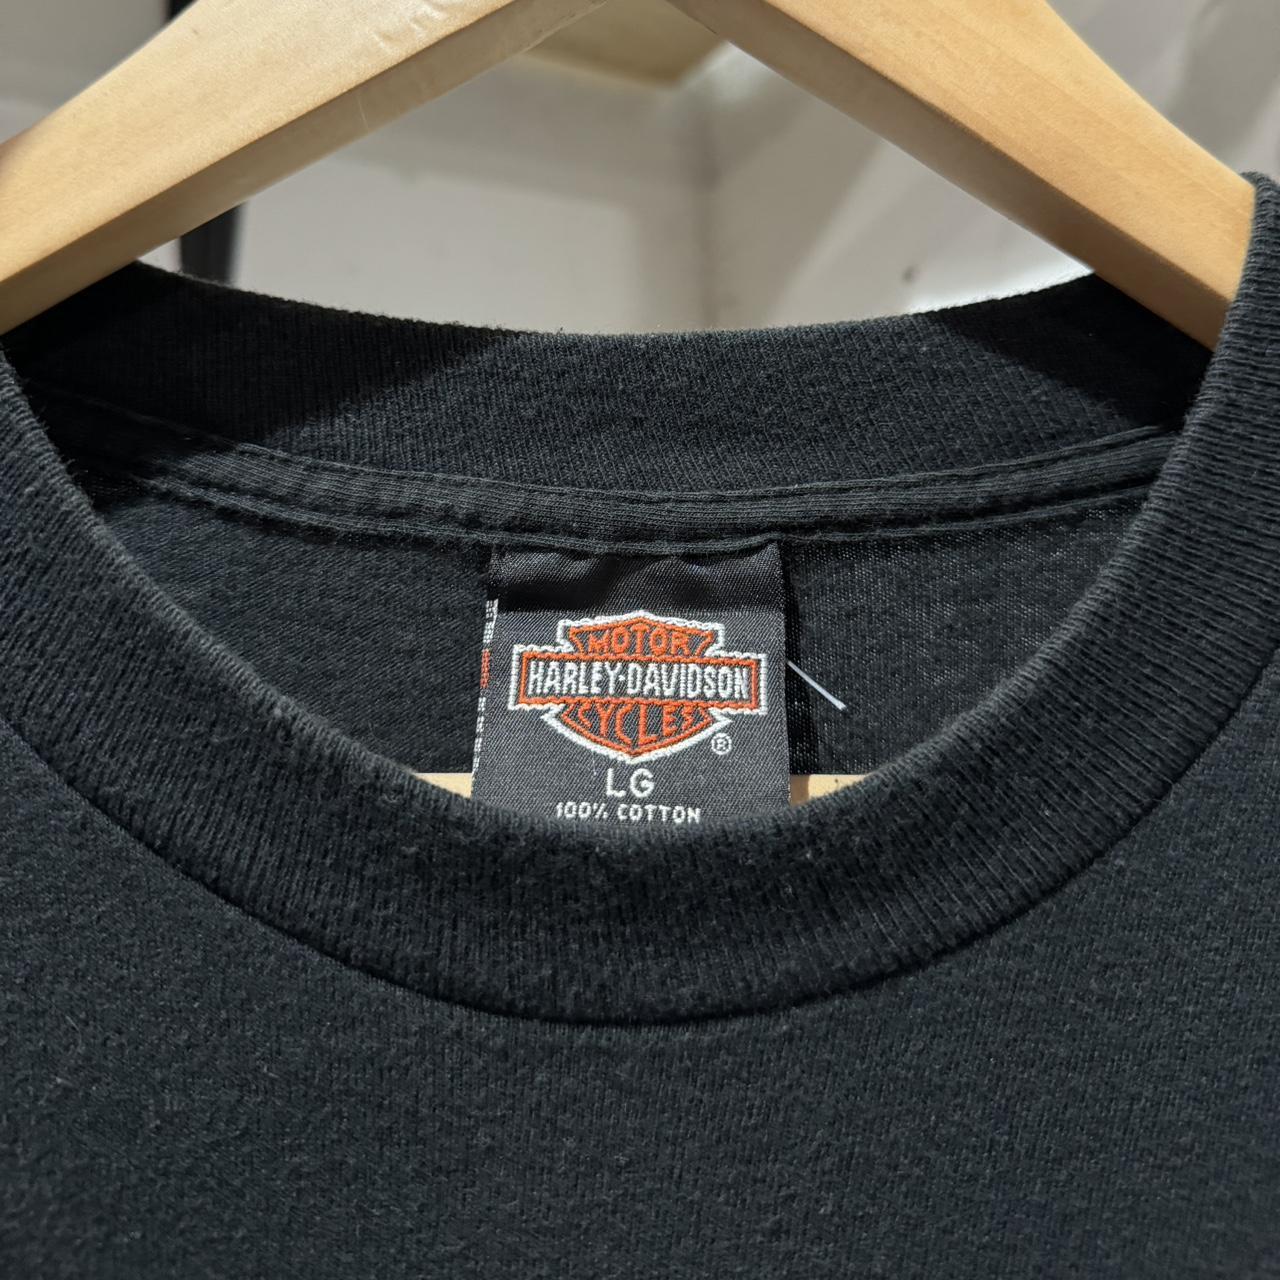 Harley Davidson Men's Black T-shirt (3)